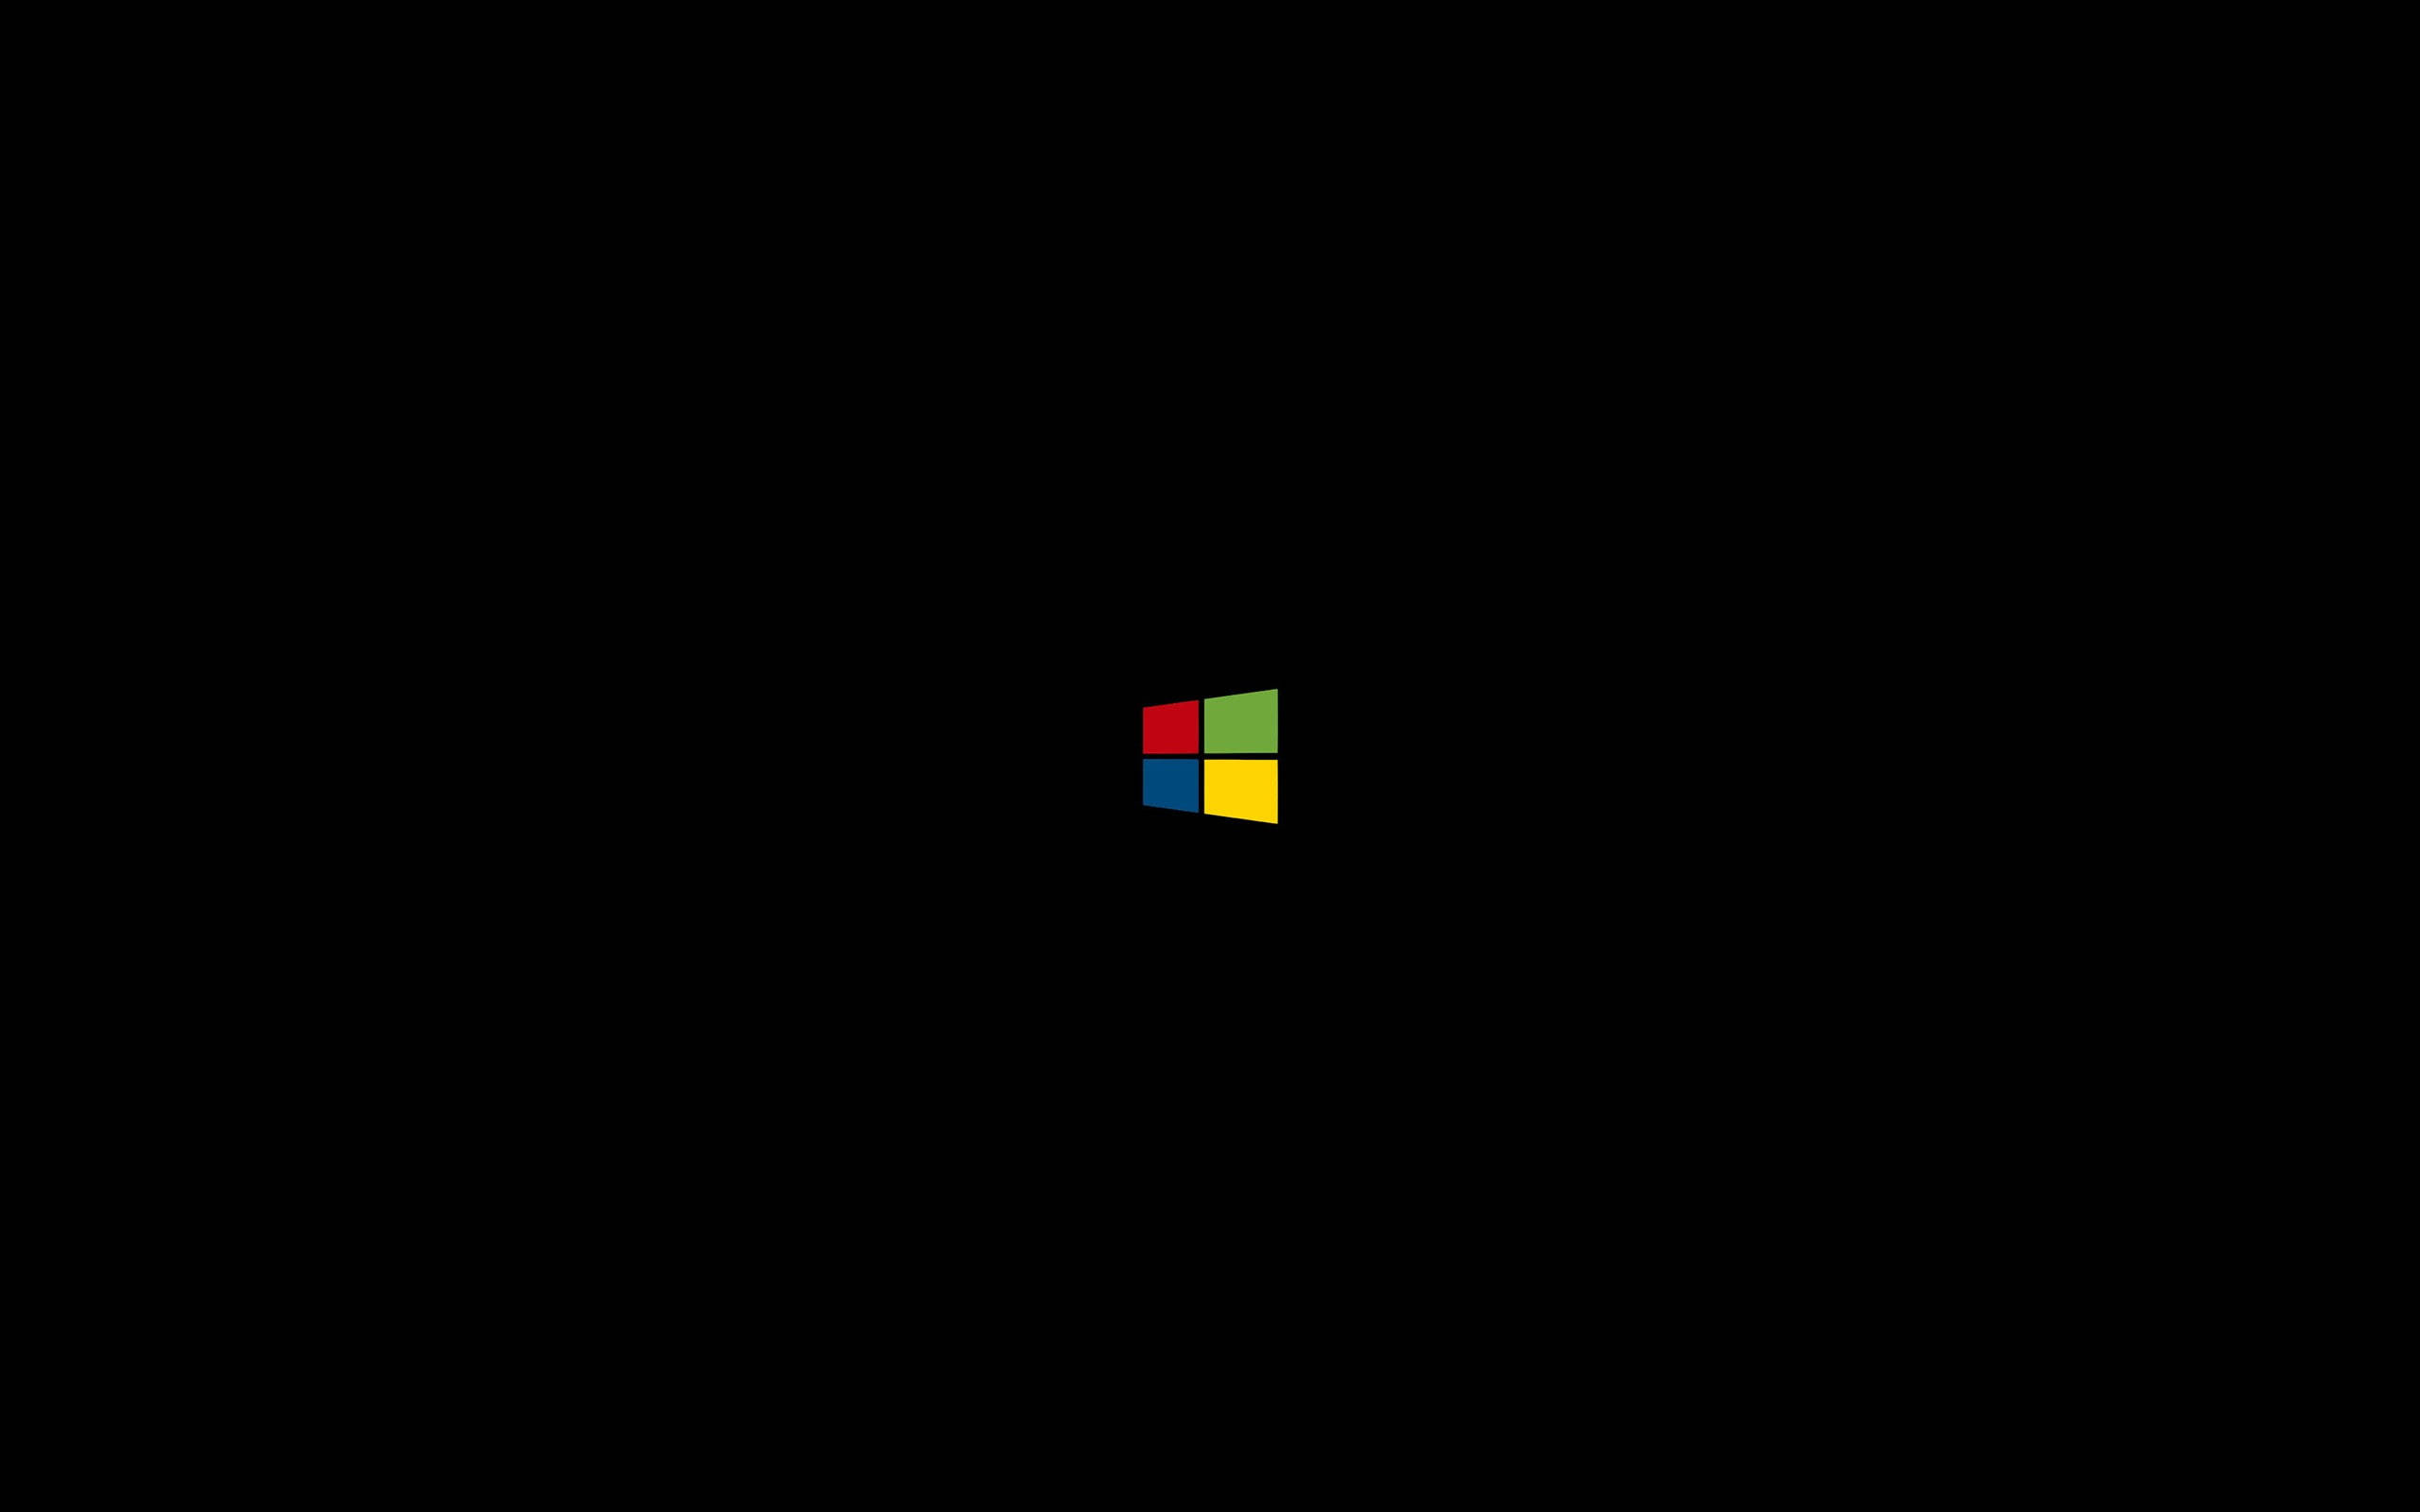 Simple Windows Logo Backgrounds